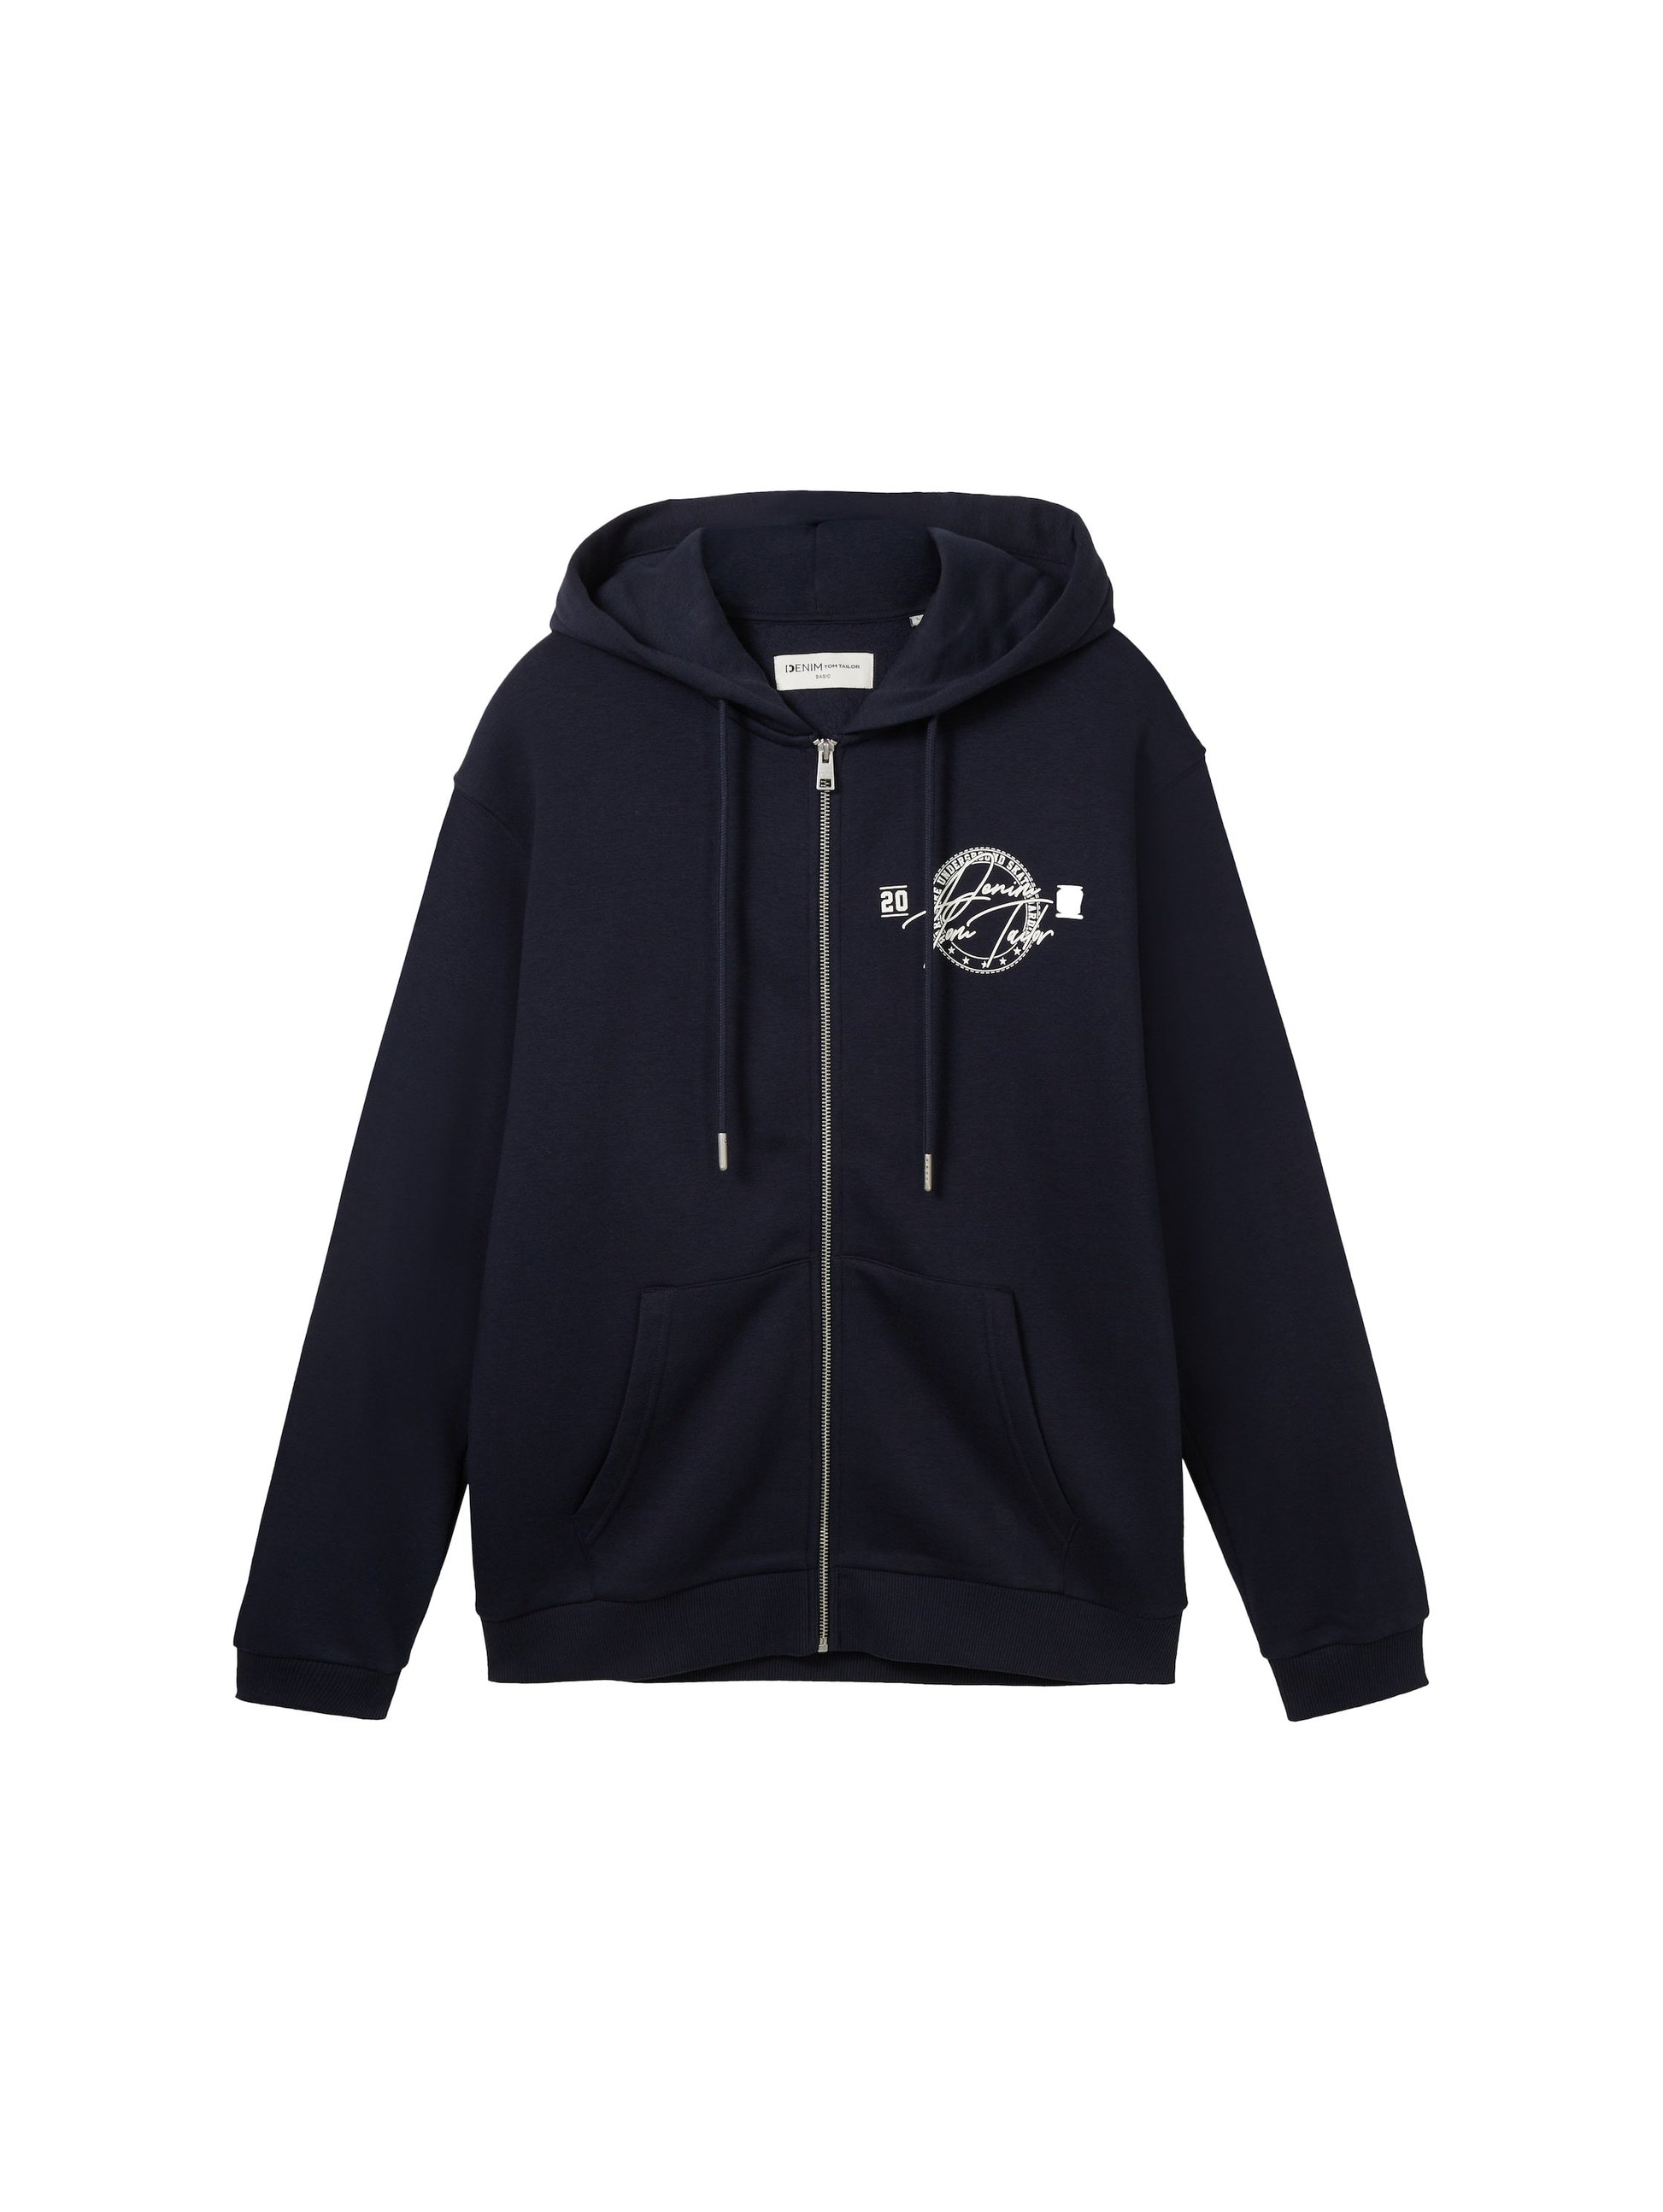 Modehaus Blum-Jundt jacket with print – hoodie